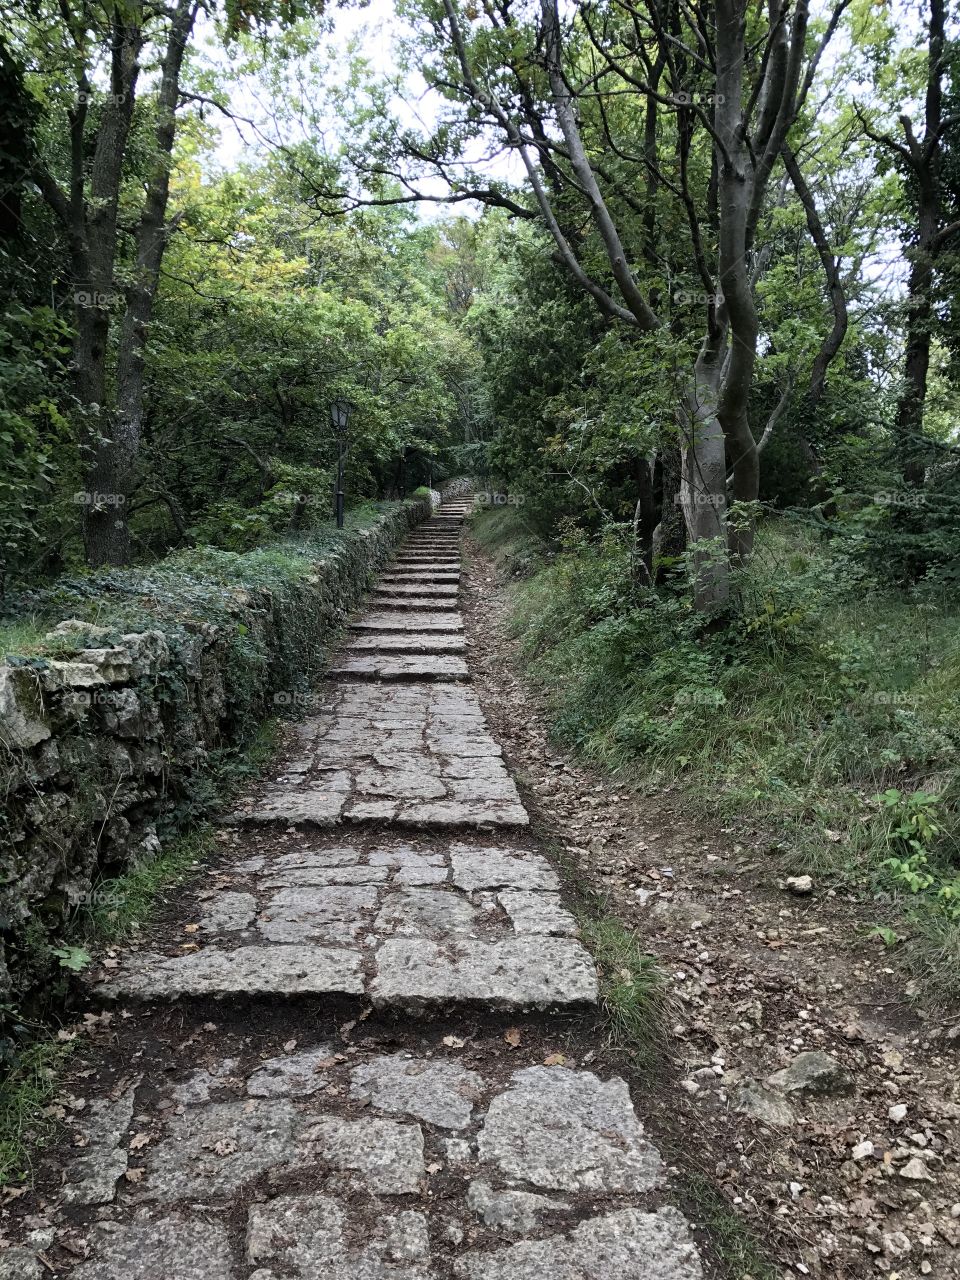 San Marino
Witches trail